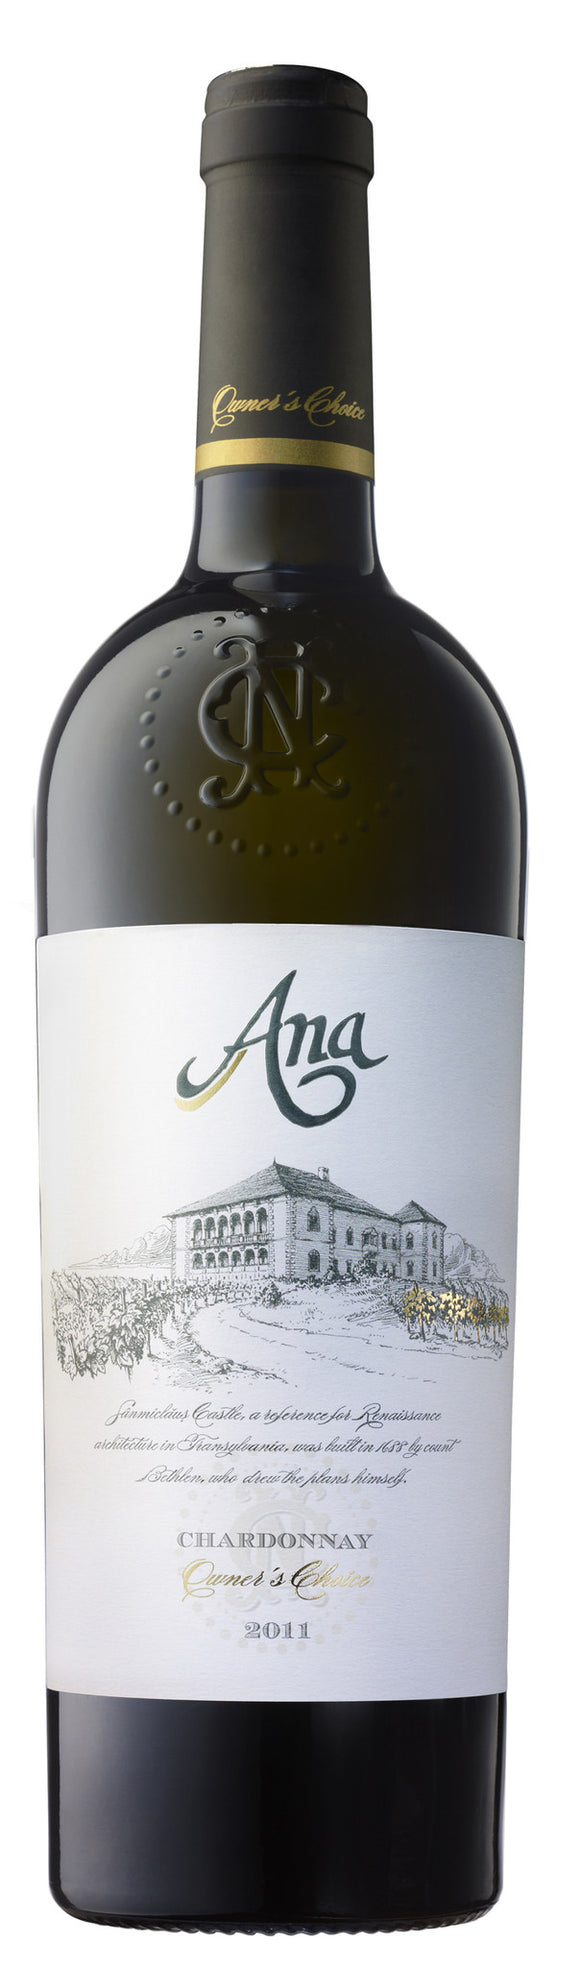 Owner's Choice - Ana - Chardonnay - Tezauro - Kwaliteitswijnen uit Roemenië